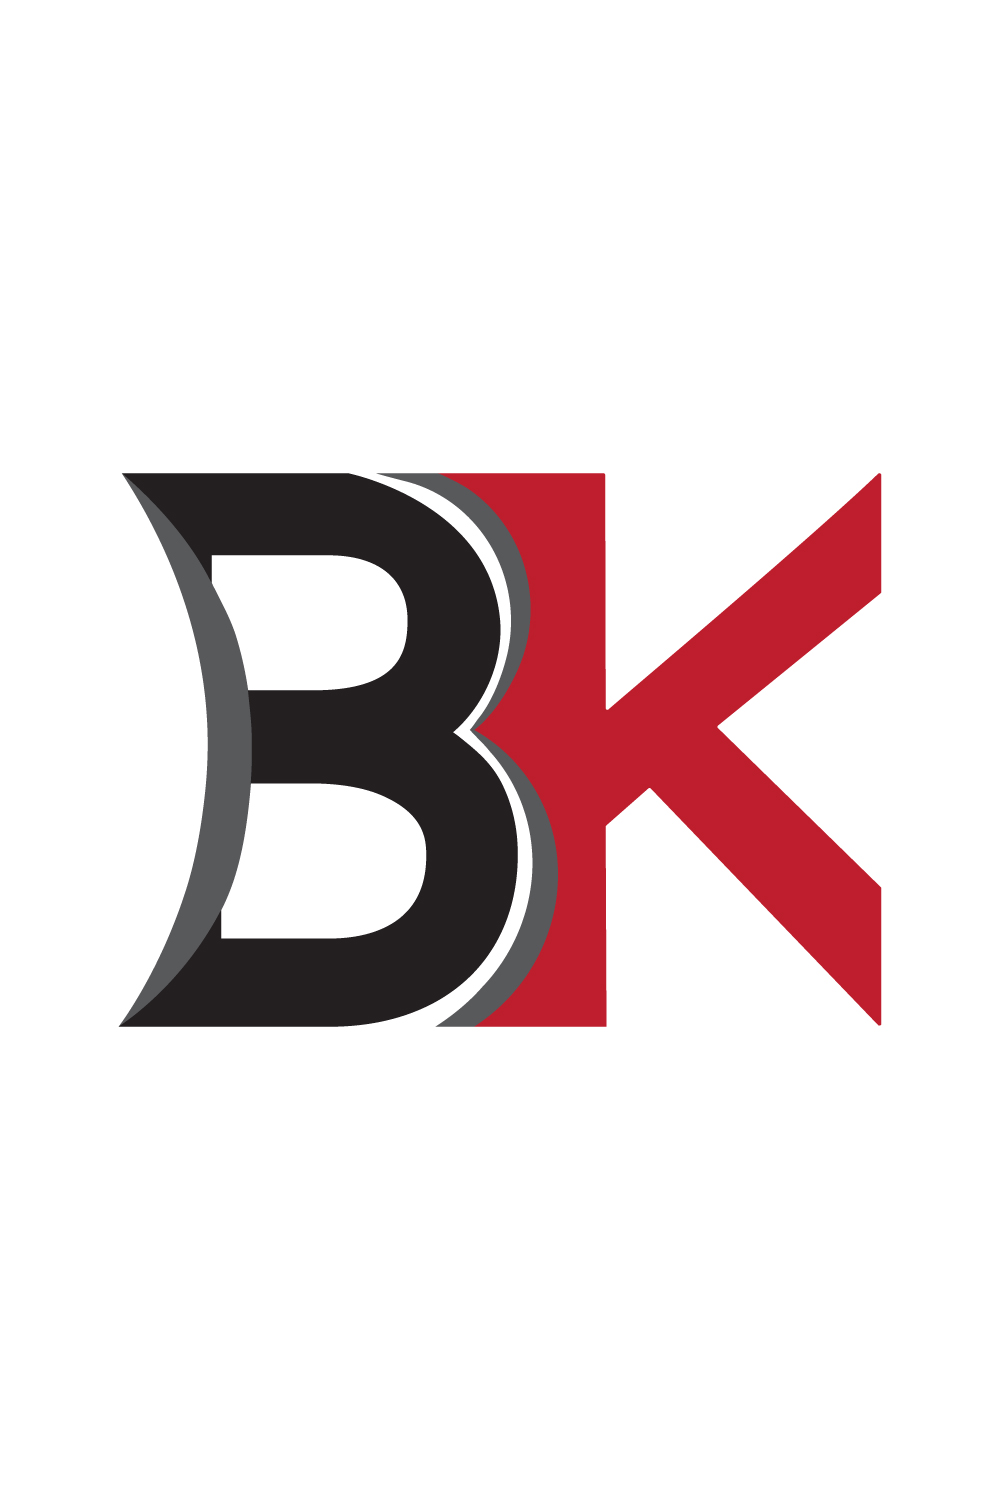 Abstract BK letters logo design vector icon KB logo best brand design BK logo template best company identity pinterest preview image.